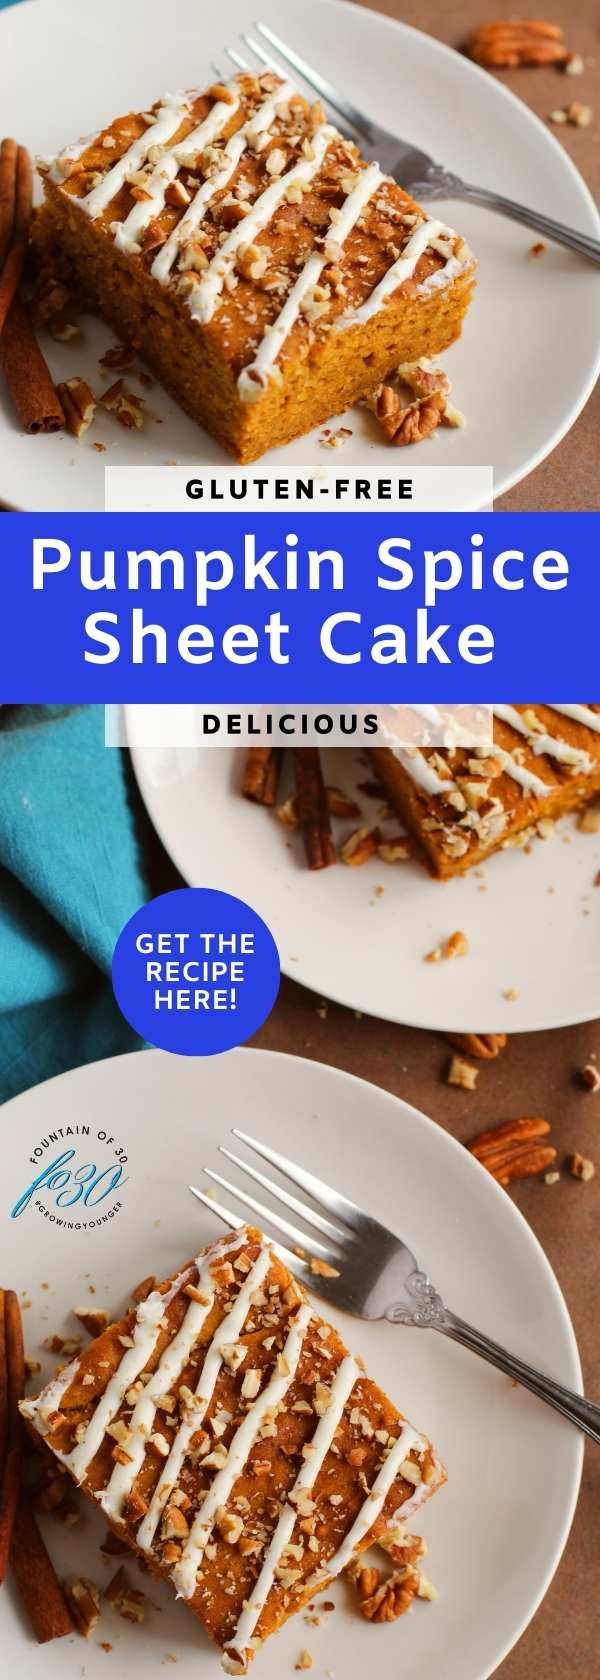 pumpkin spice sheet cake fountainof30